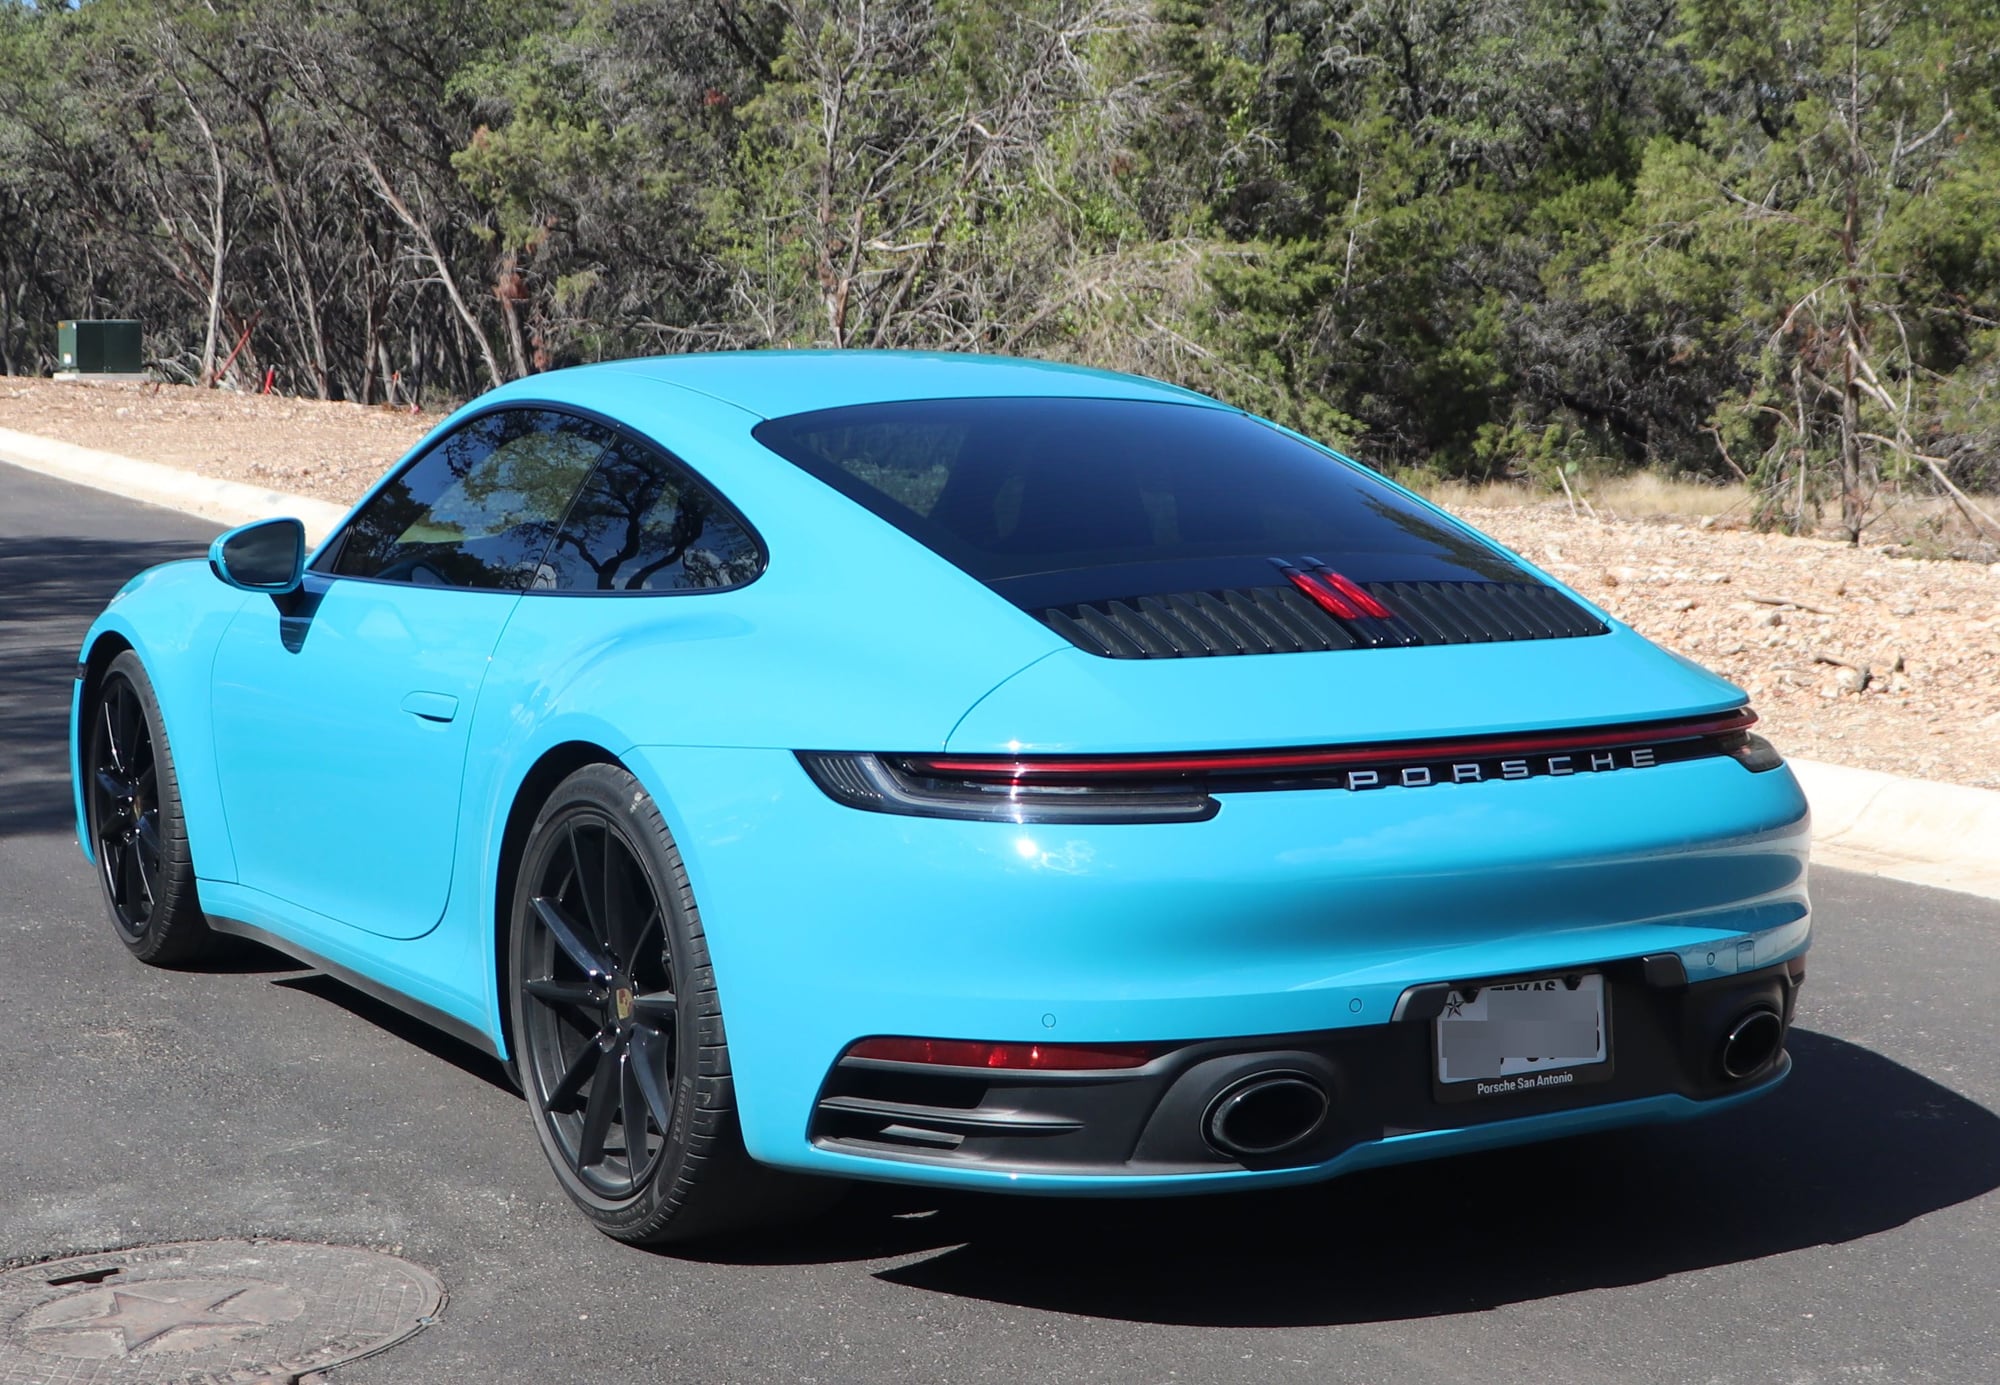 2020 Porsche 911 - 14k mile Miami Blue 992 CS - Used - VIN WP0AB2A98LS225847 - 14,000 Miles - 6 cyl - 2WD - Automatic - Coupe - Blue - San Antonio, TX 78231, United States